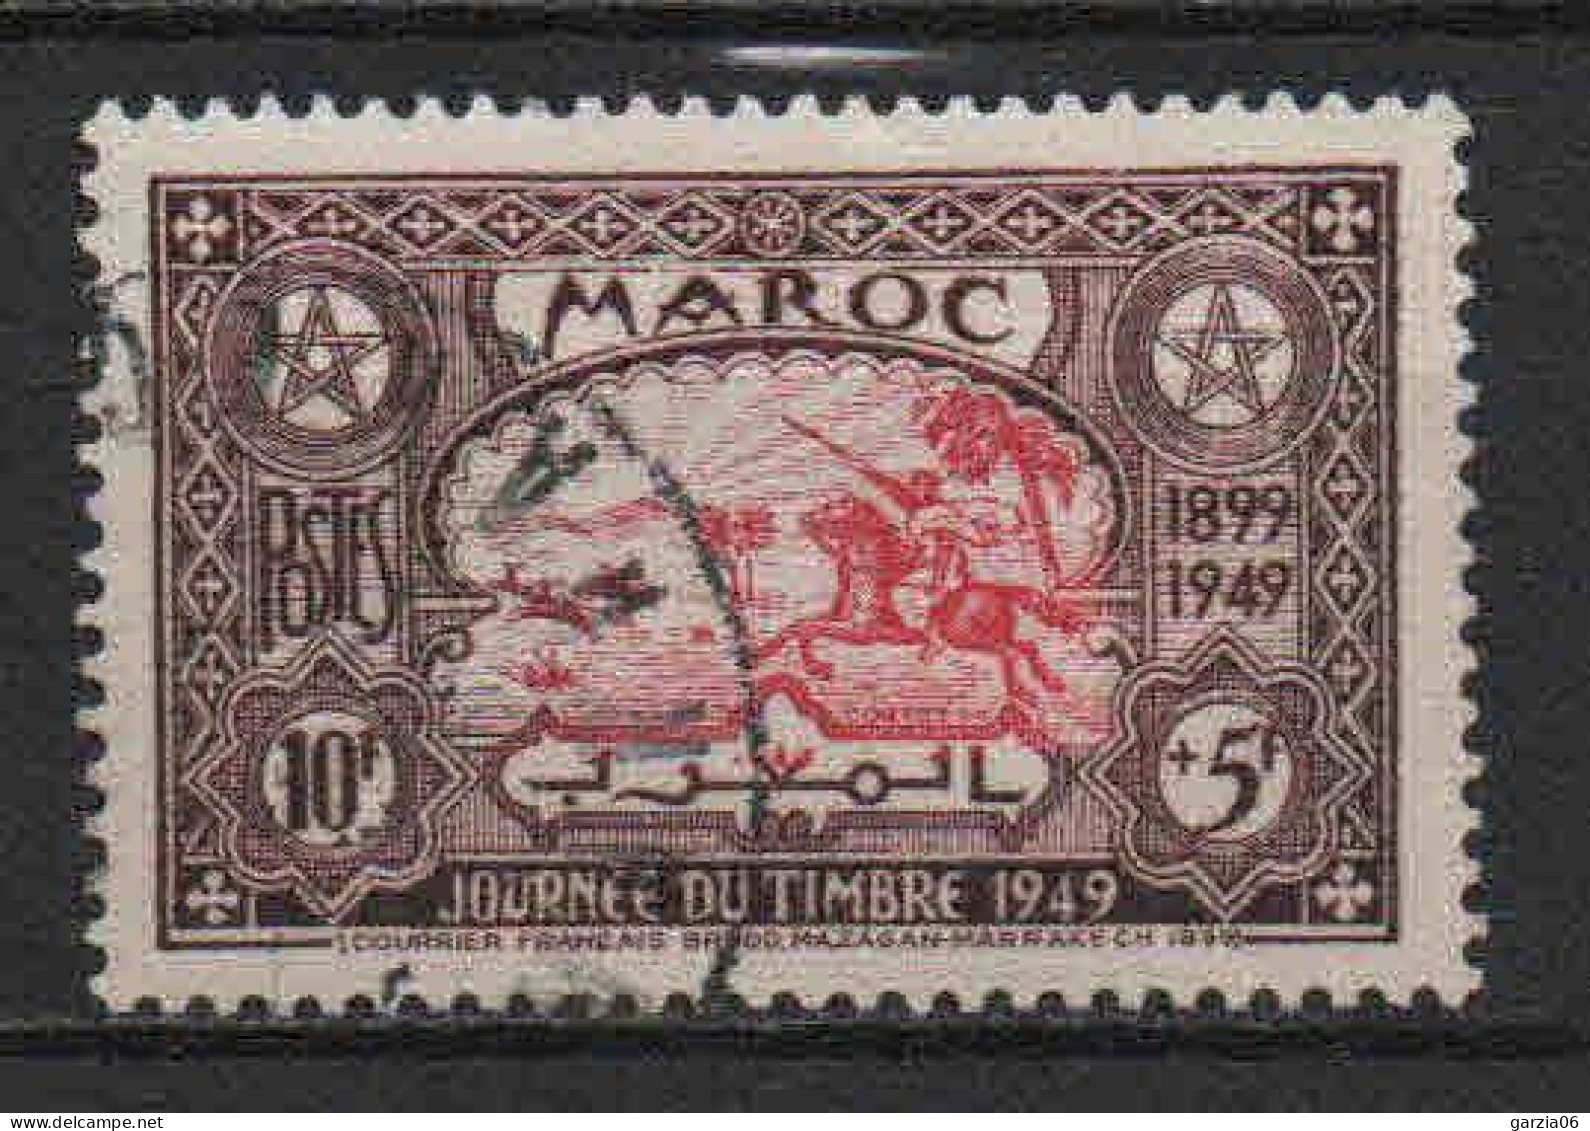 Maroc - 1949 - Journée Du Timbre -  N° 275 - Oblit - Used - Gebruikt